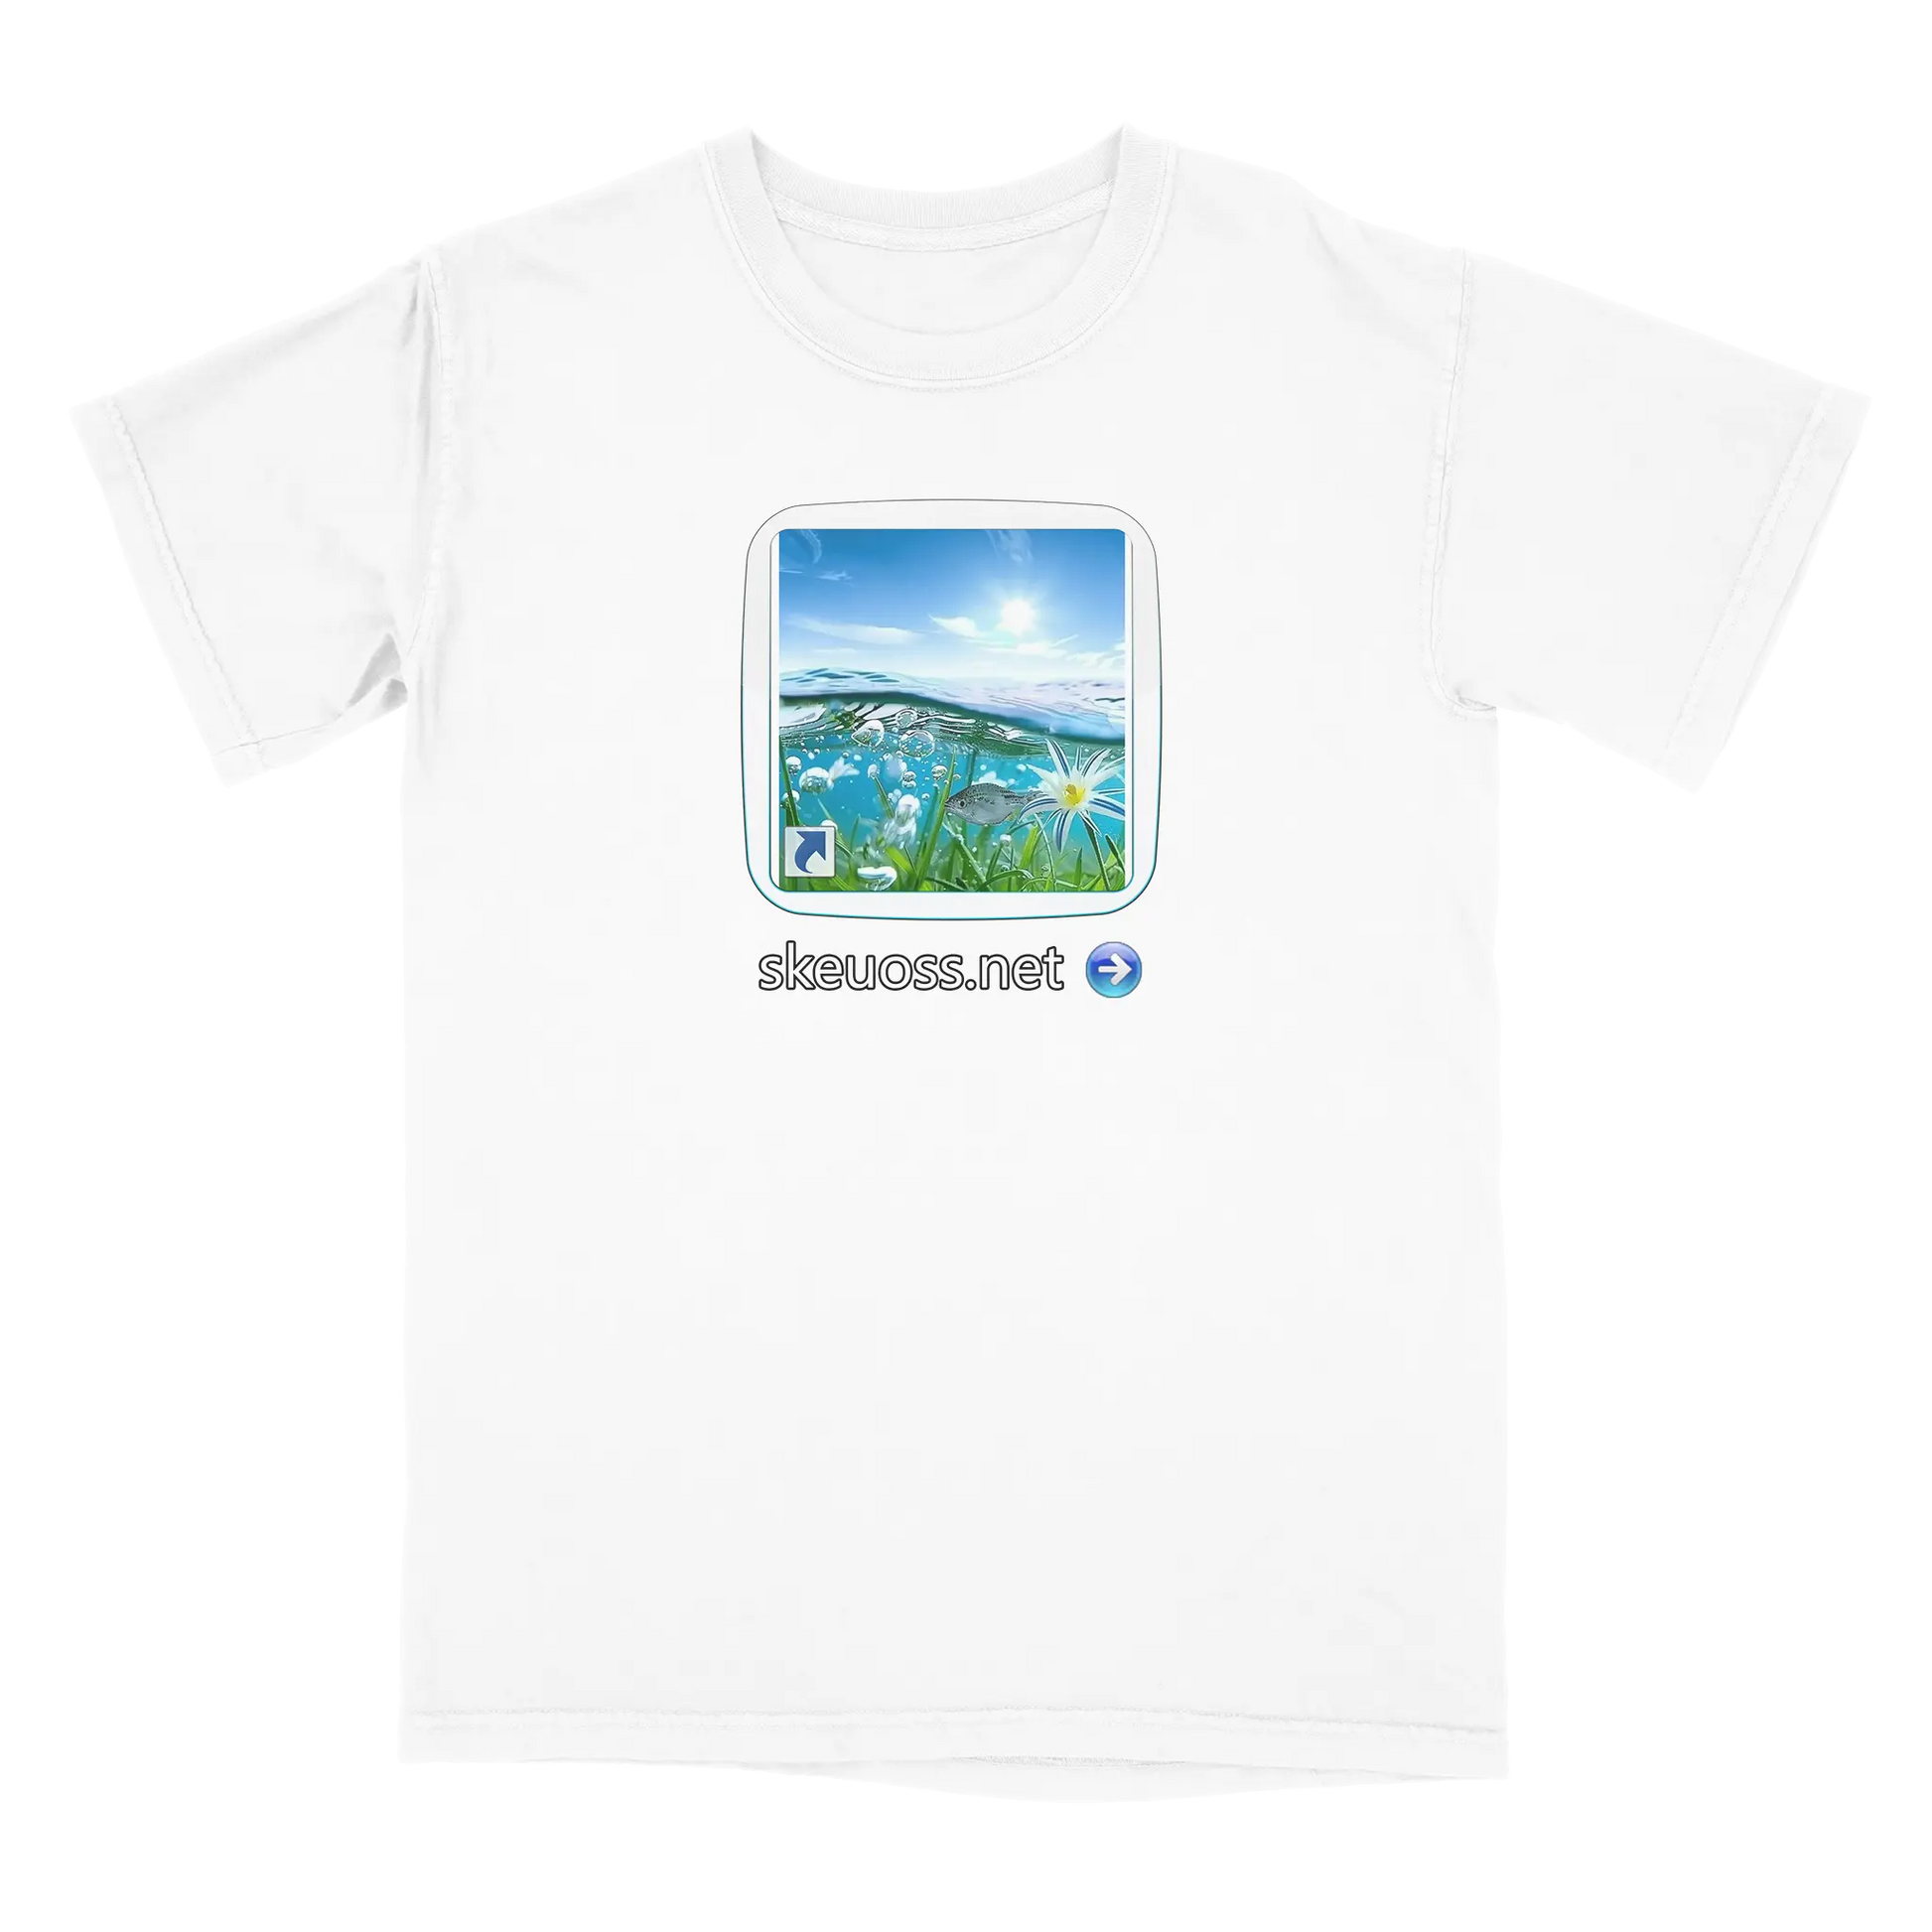 Frutiger Aero T-shirt - User Login Collection - User 338